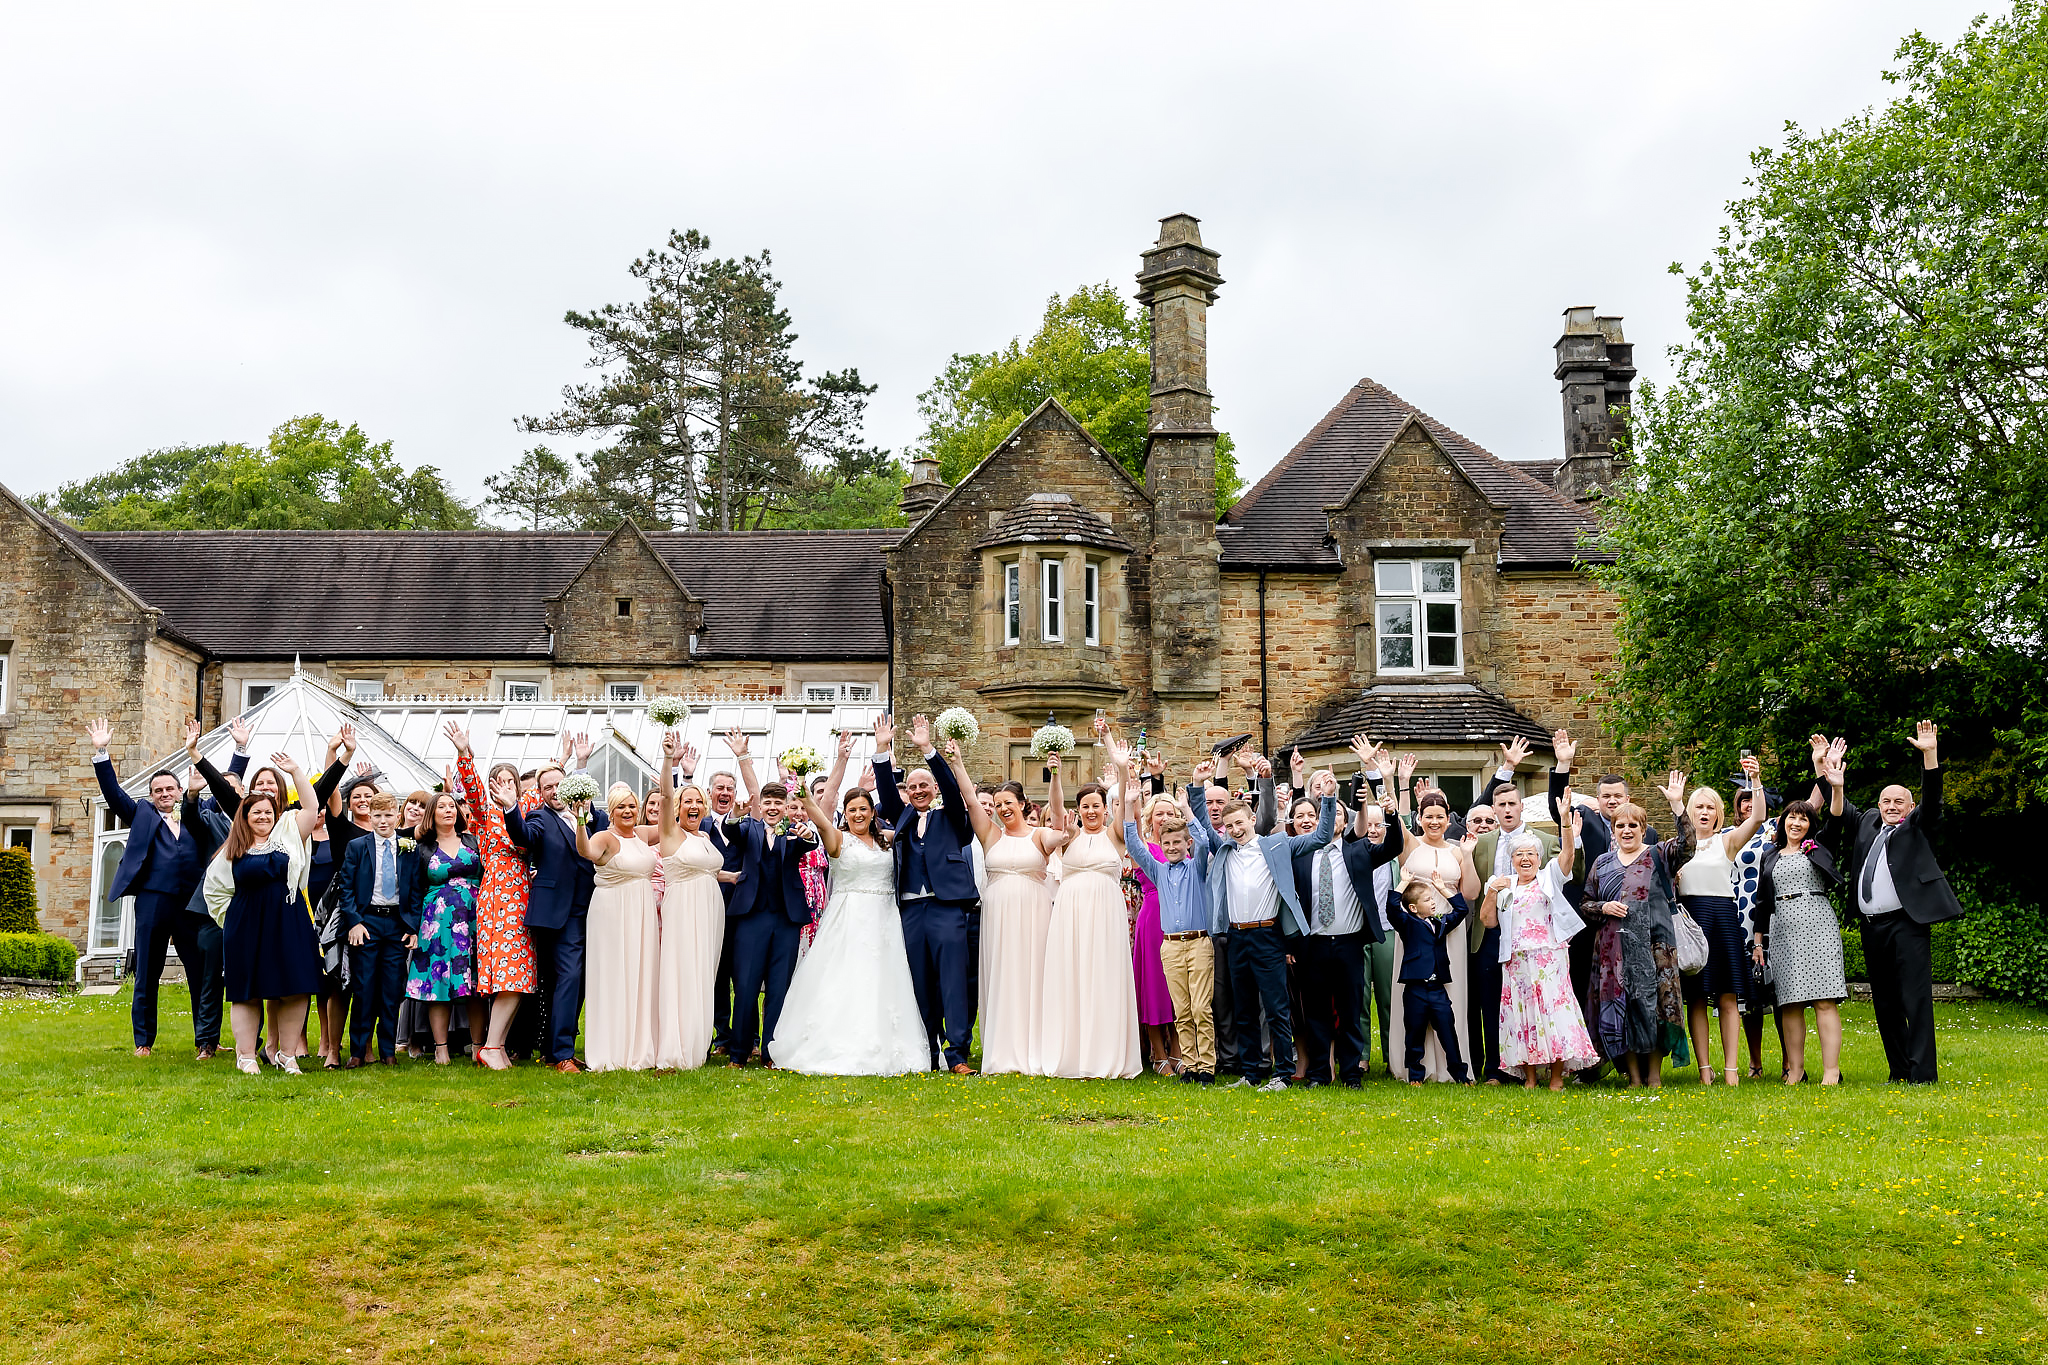 Bryngarw House Wedding Photography - Group photos